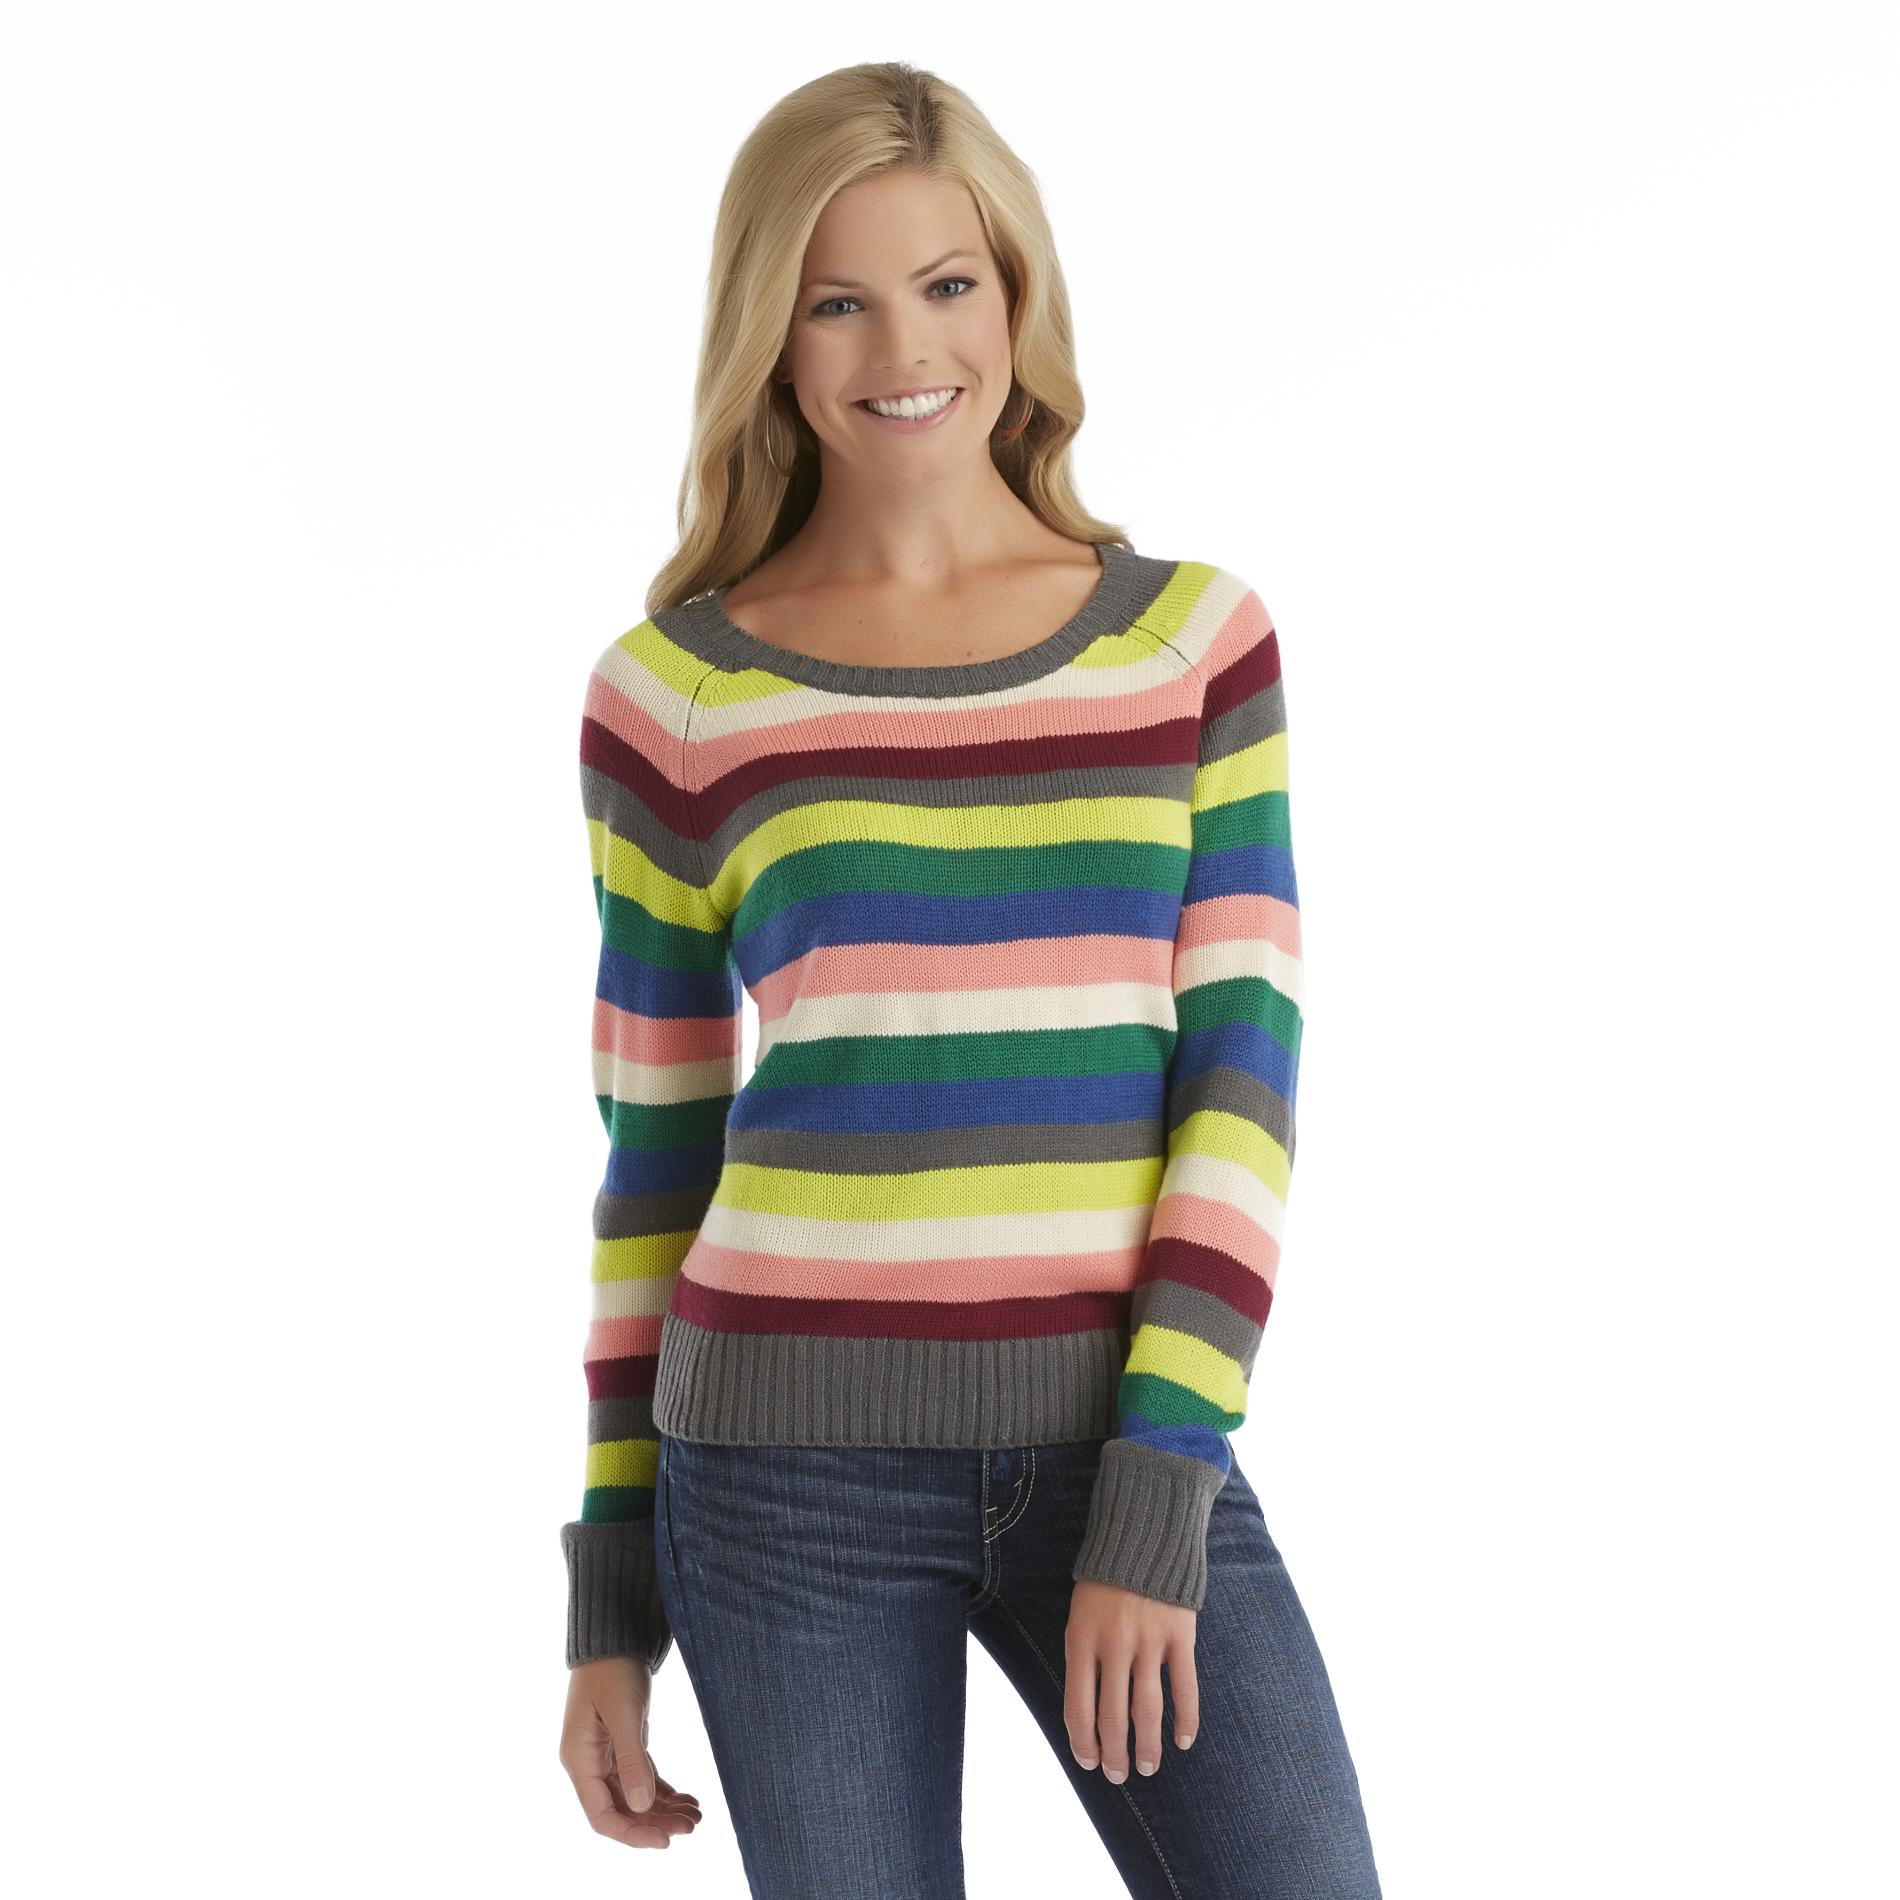 Route 66 Women's Knit Sweater - Rainbow Striped